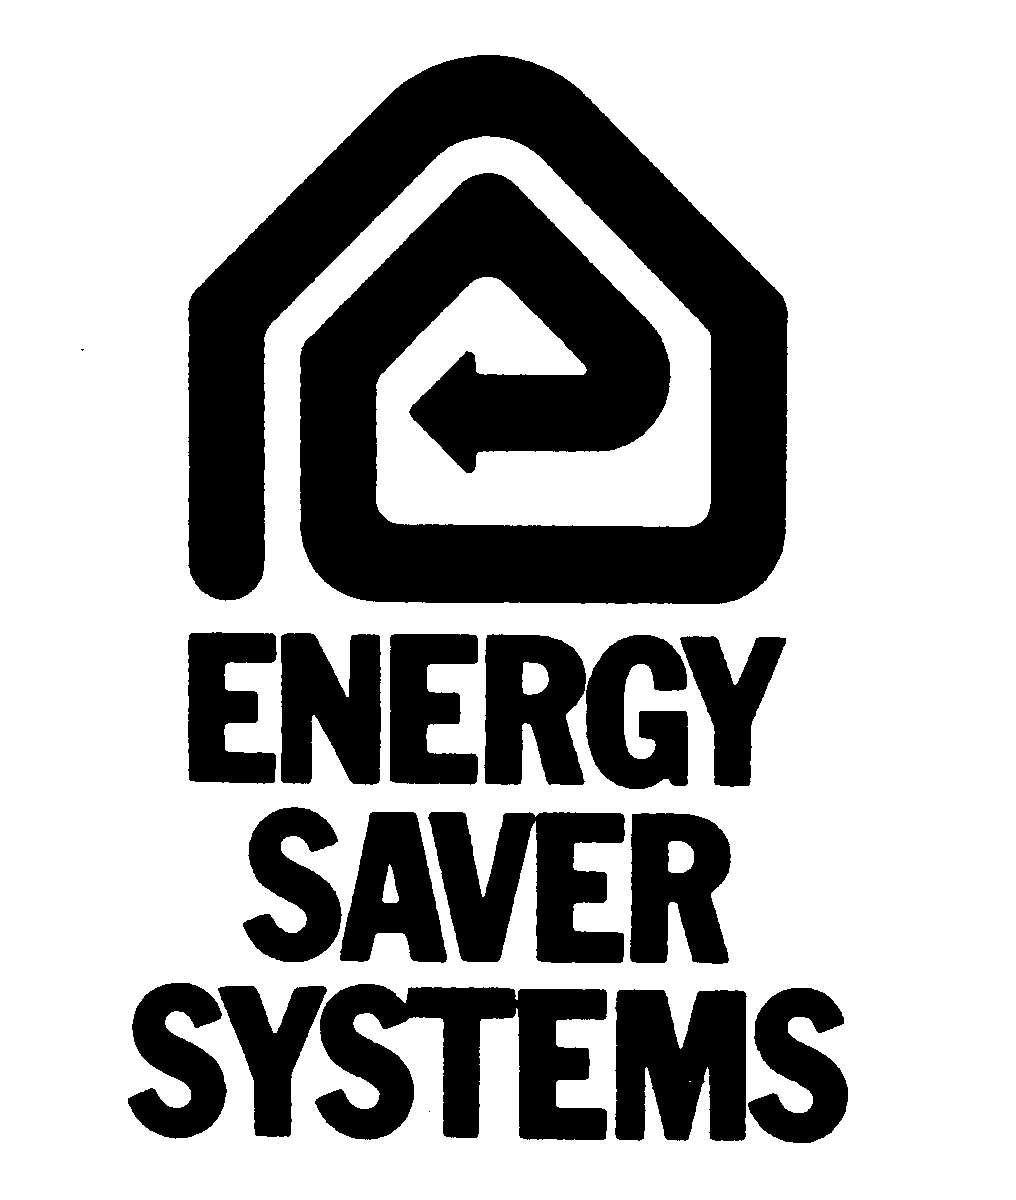  ENERGY SAVER SYSTEMS